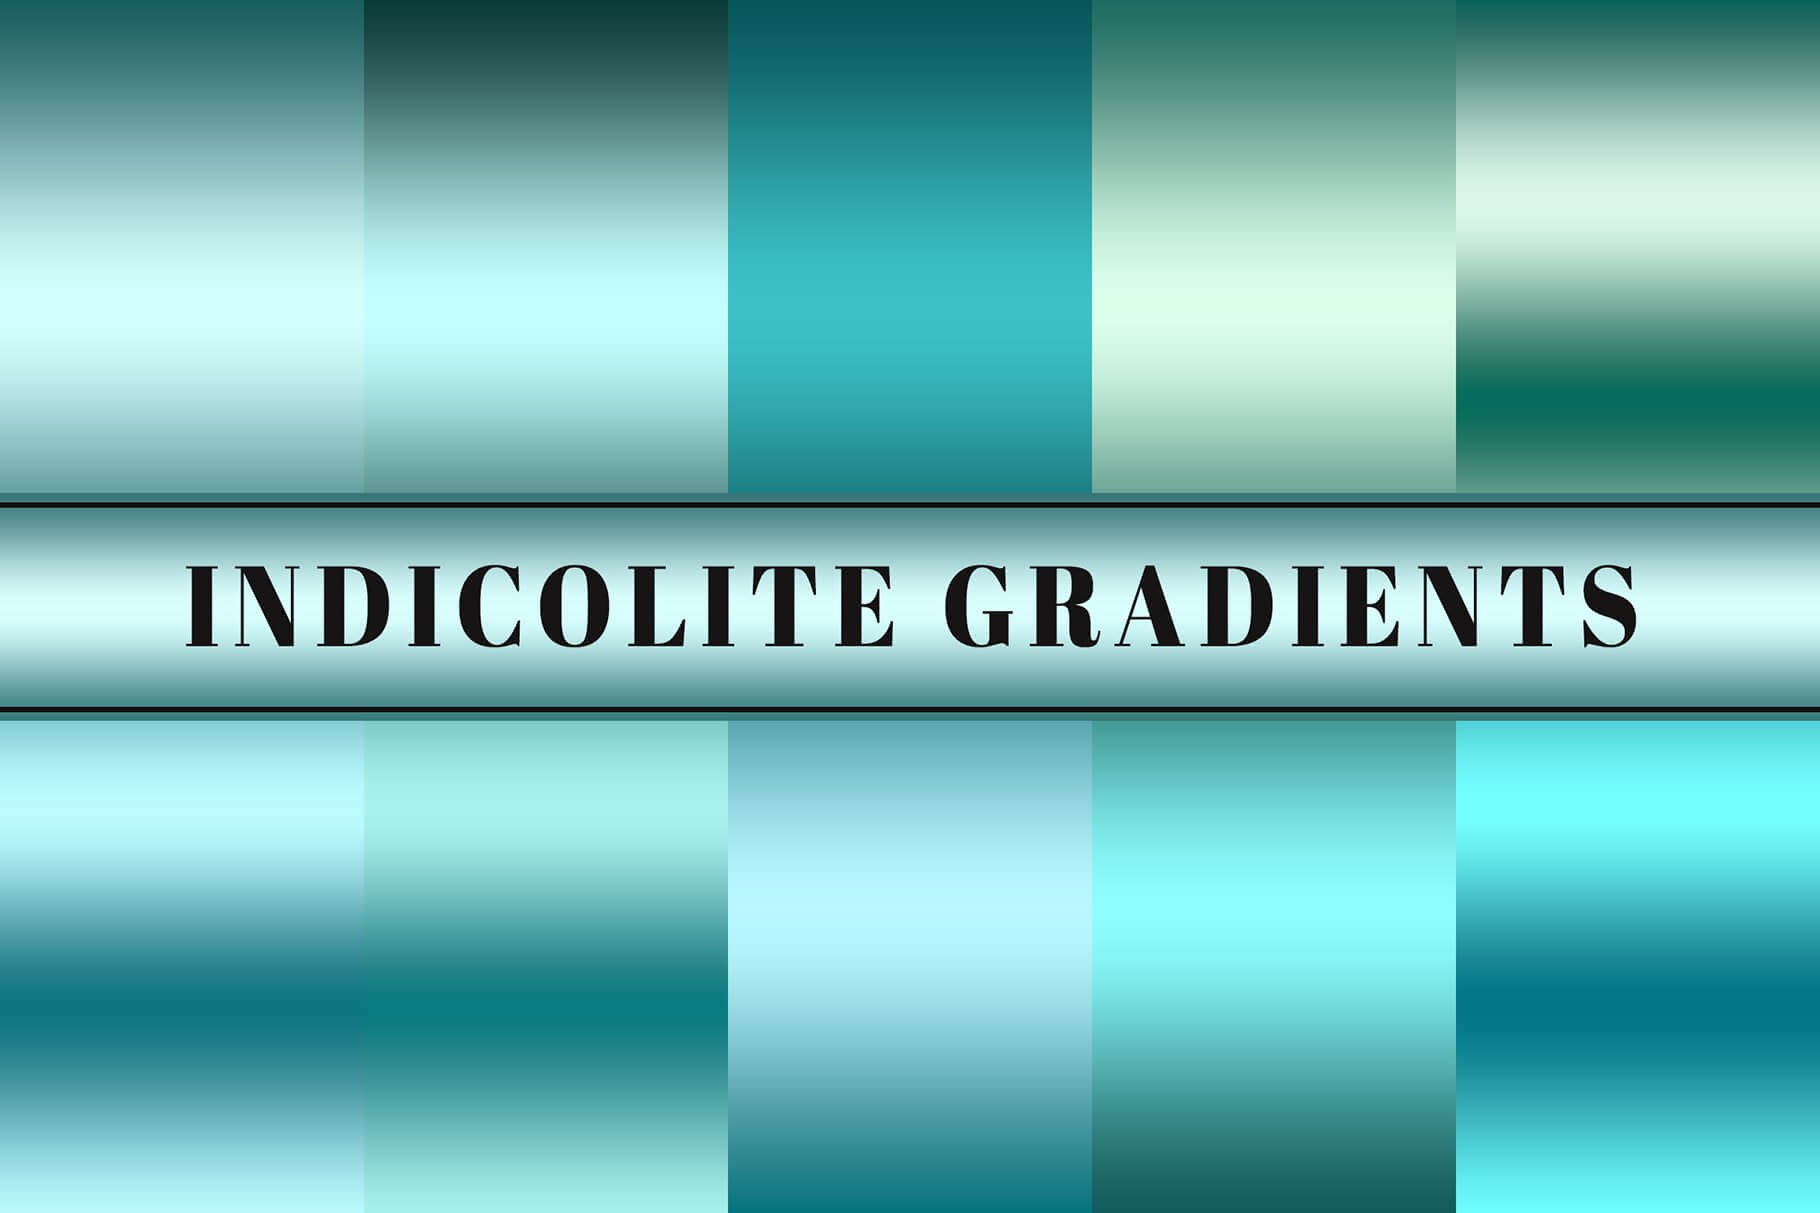 Indicolite Gradients cover image.